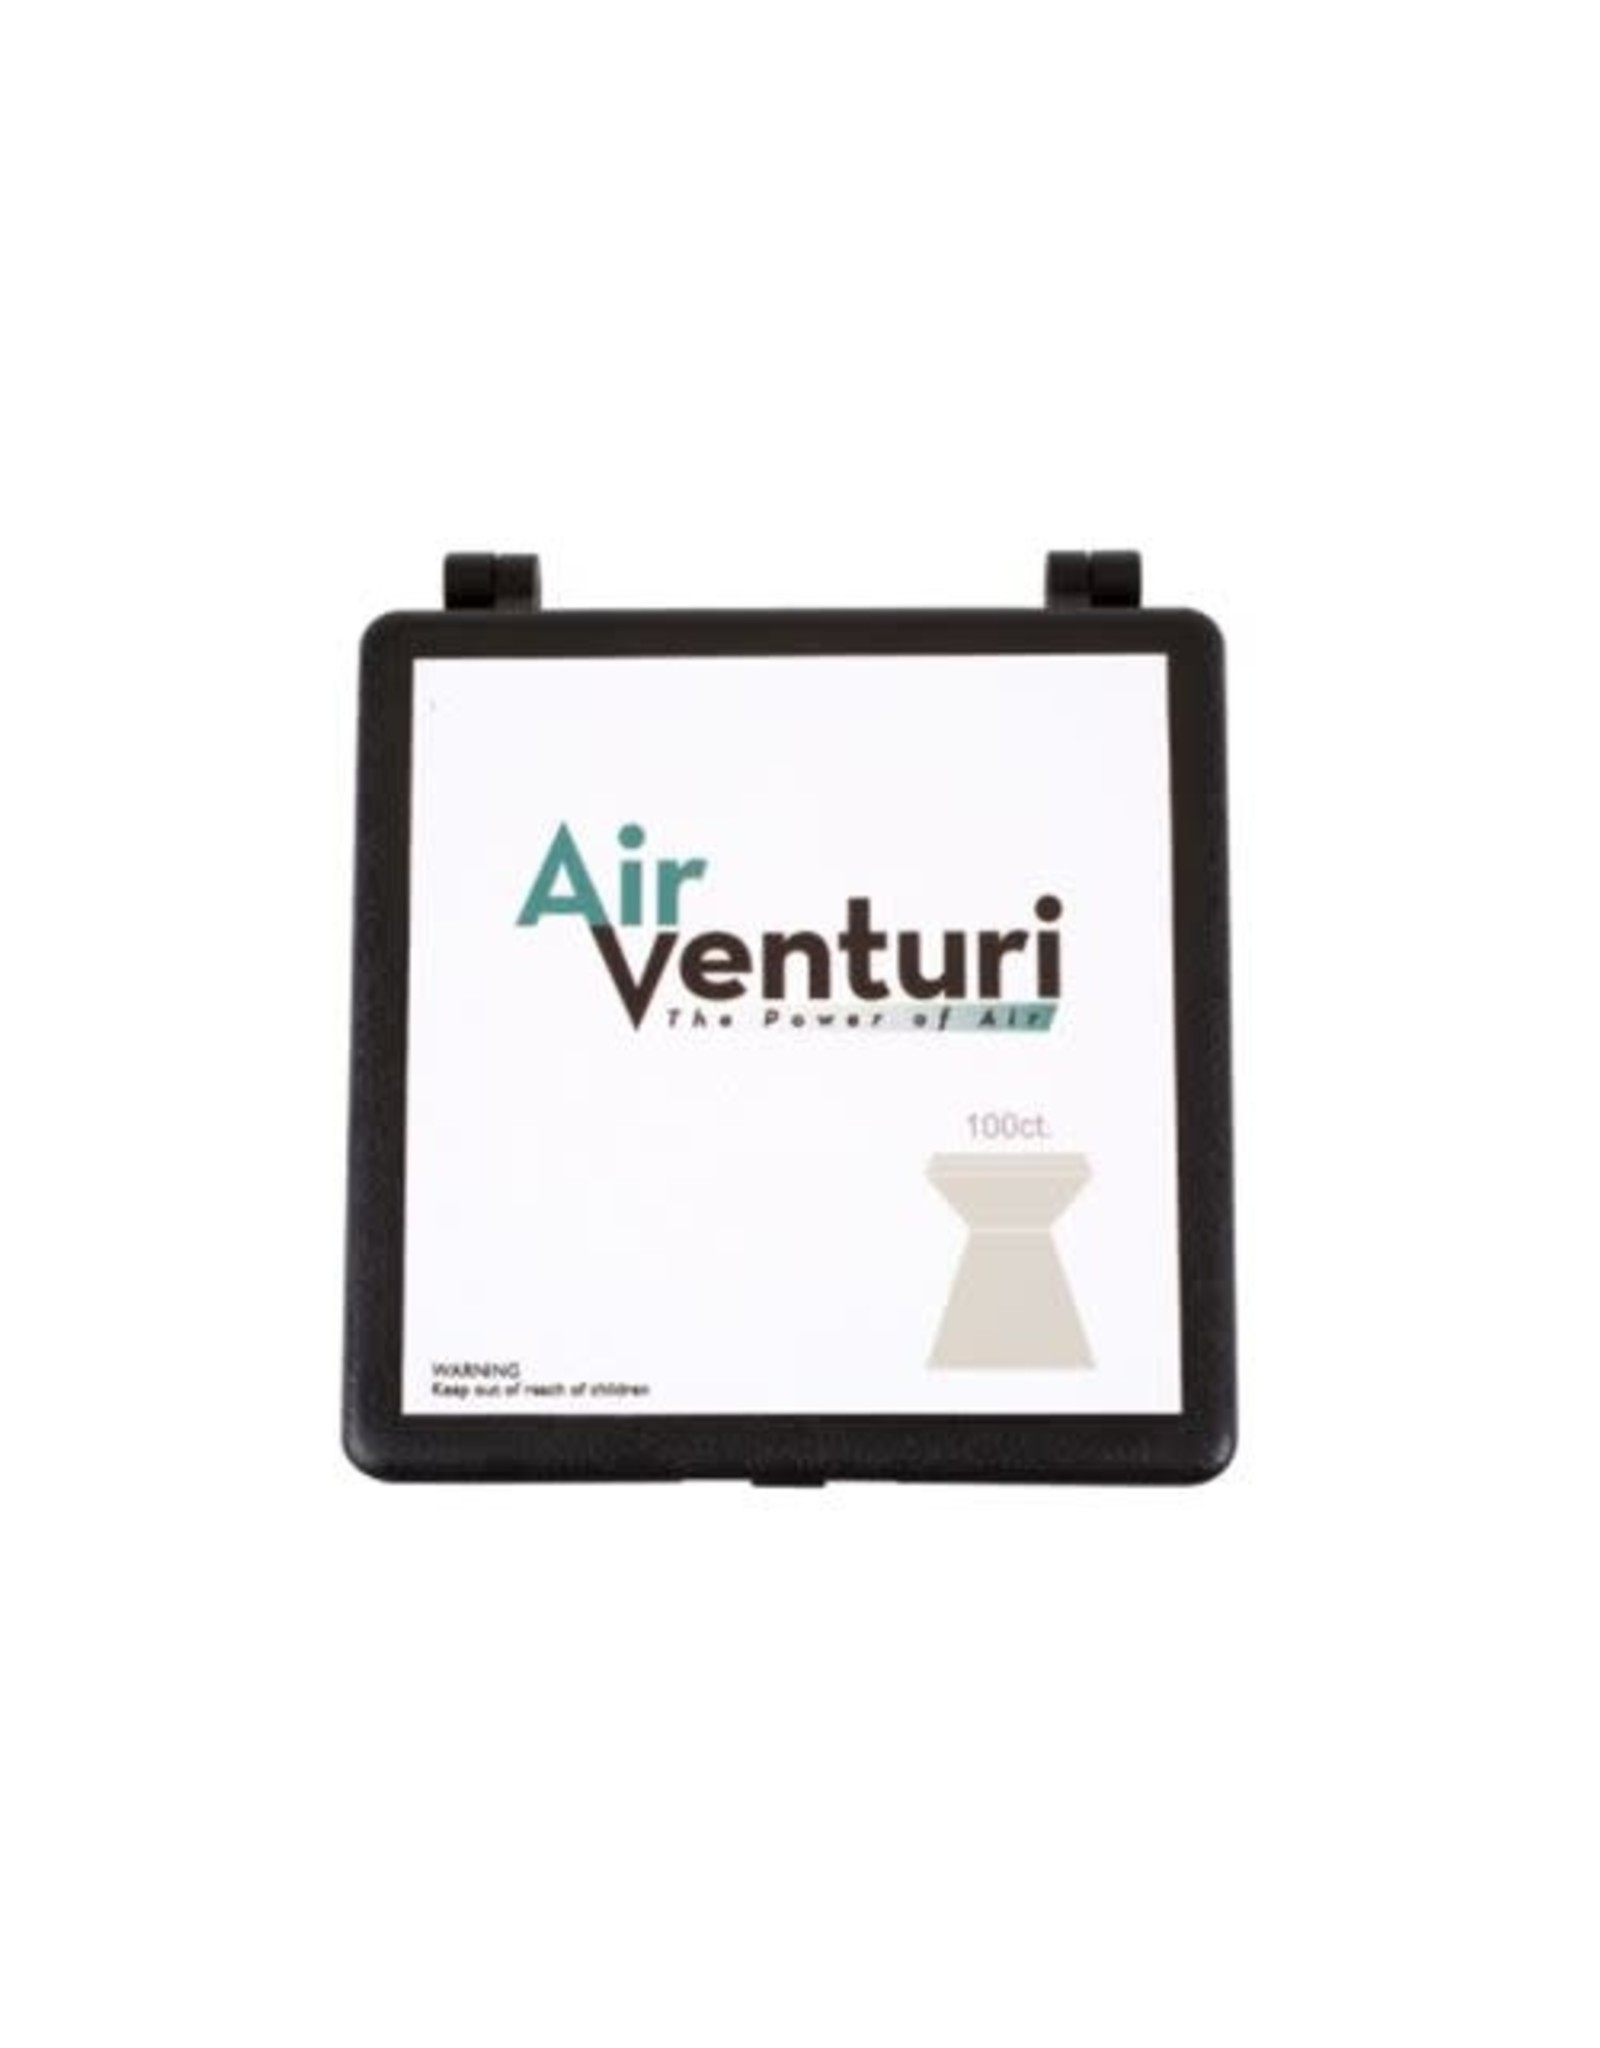 Air Venturi .177 (4.5mm) Cal. Air Venturi Pellet Box - Holds 100 Wadcutter Pellets